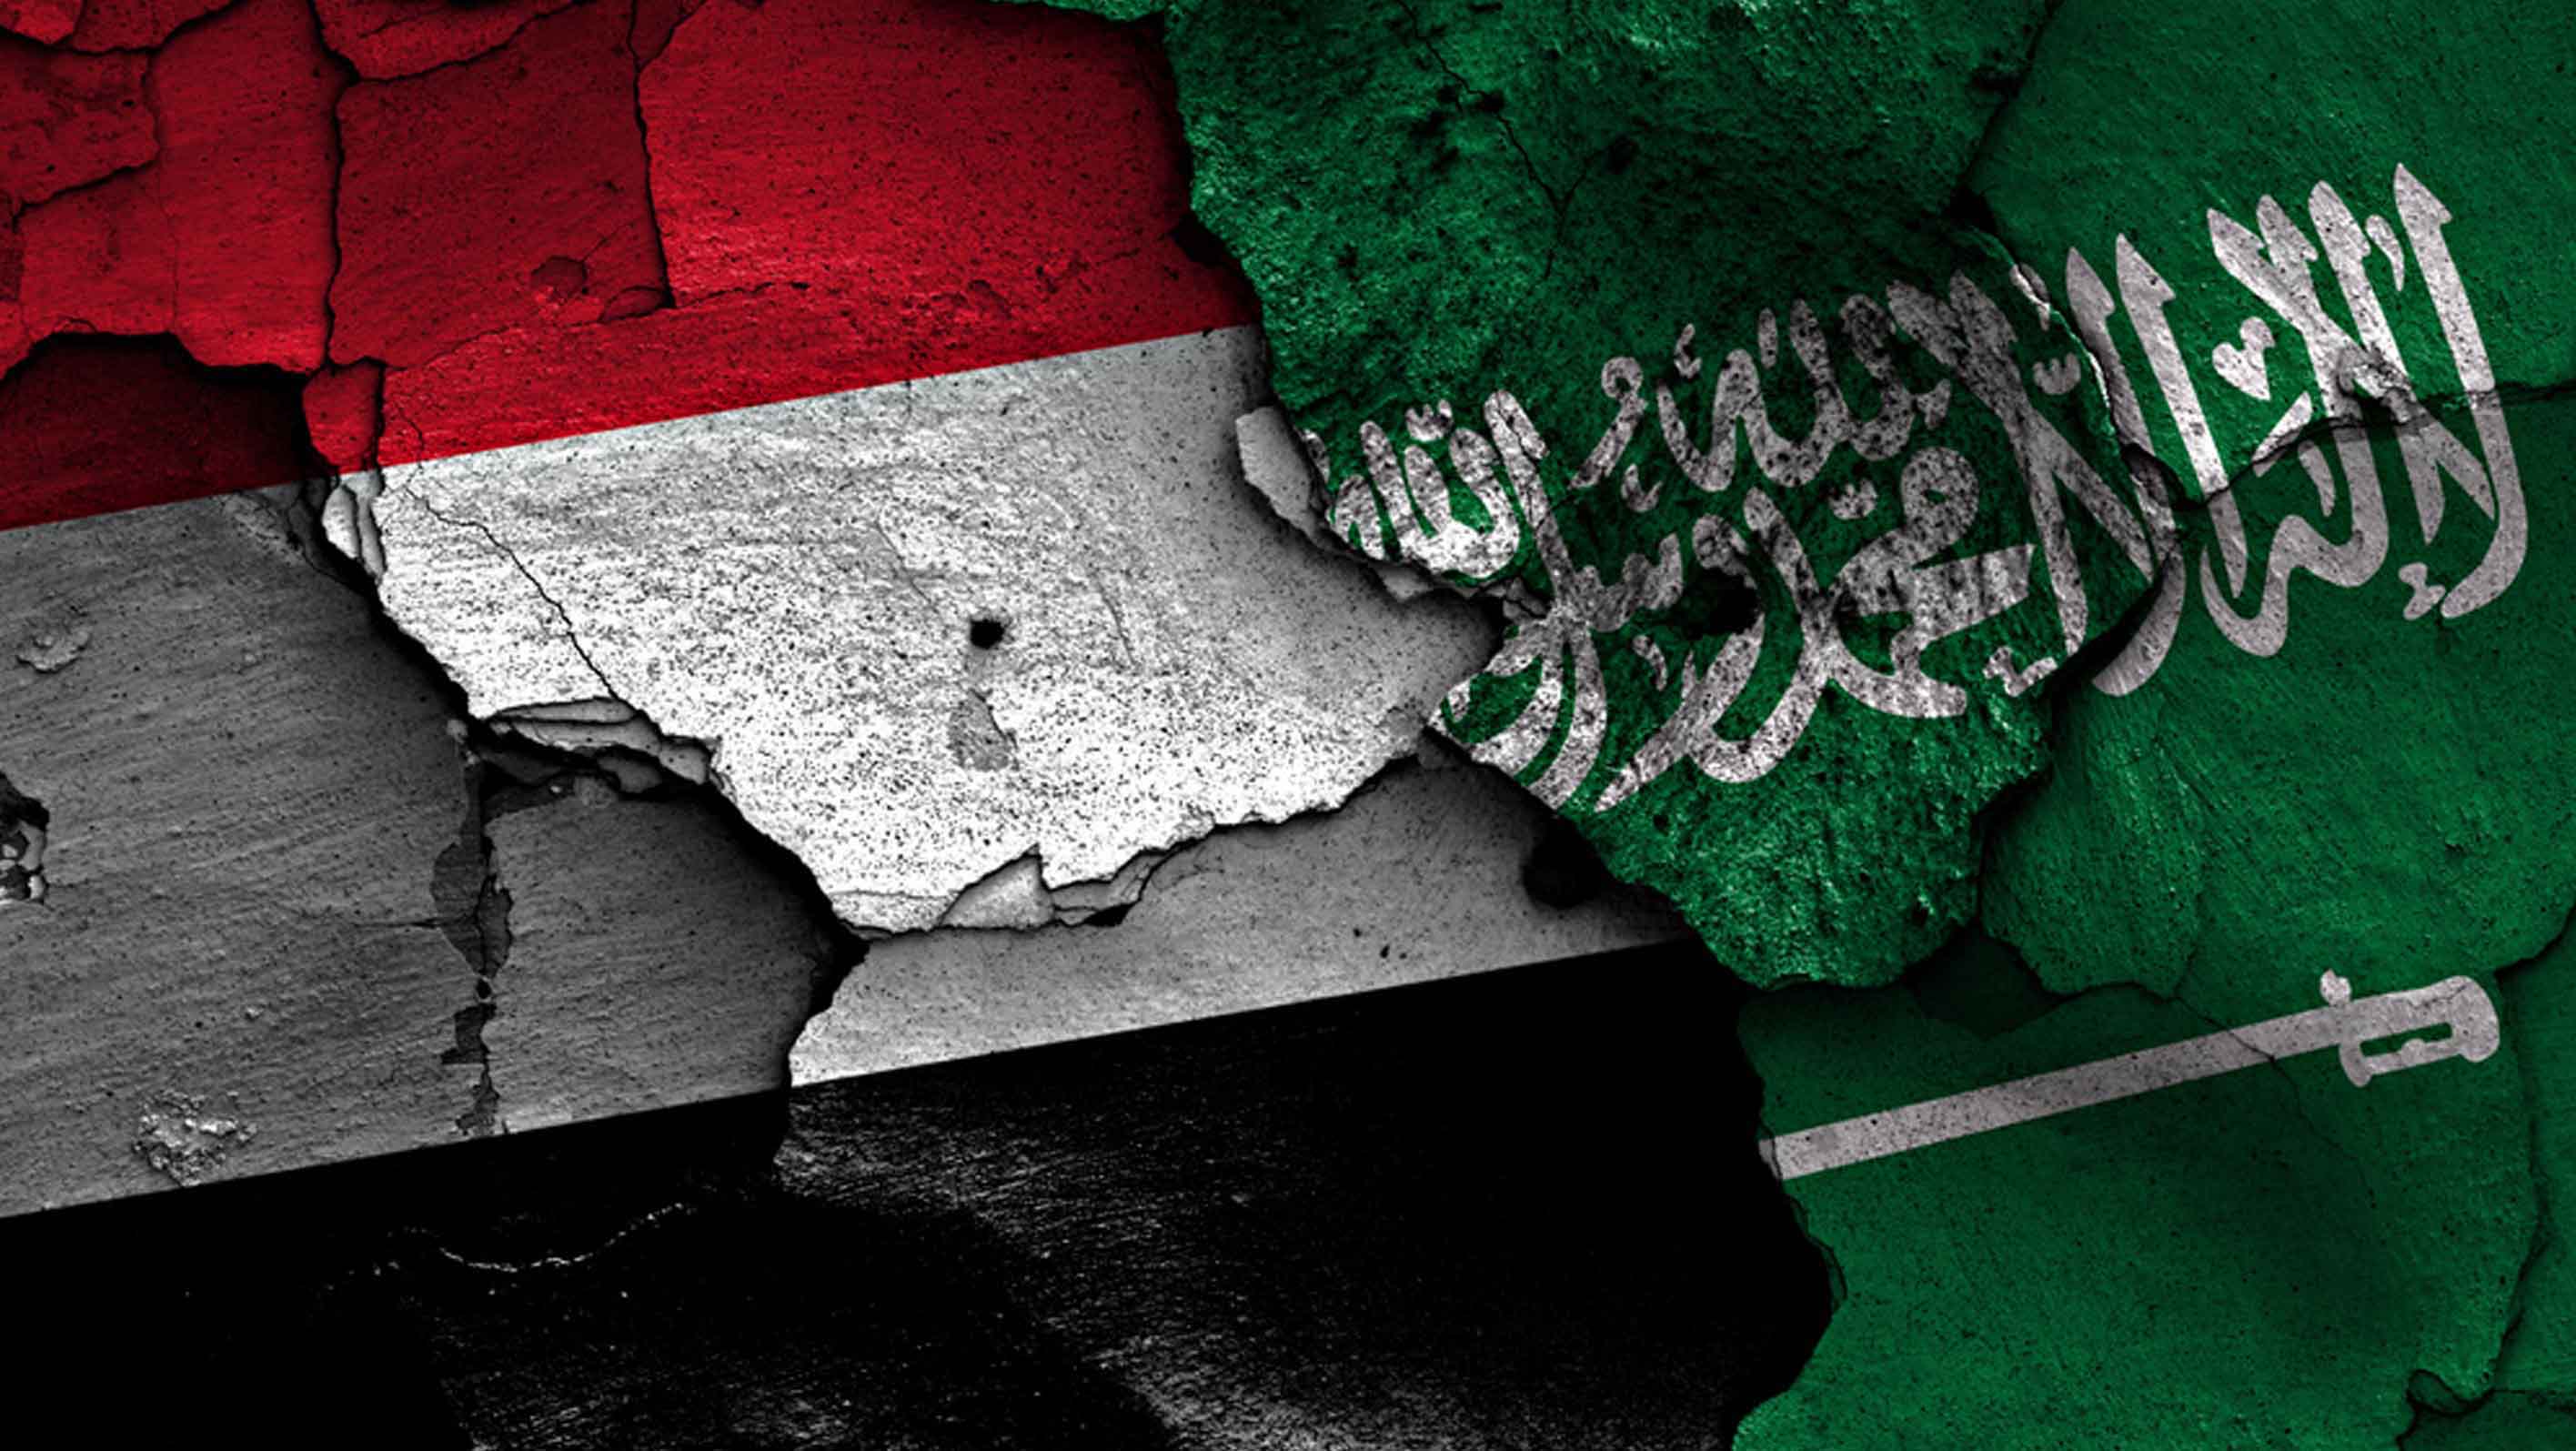 Tawakkol Karman slams Saudi Arabia's attempted image makeover in Yemeni crisis